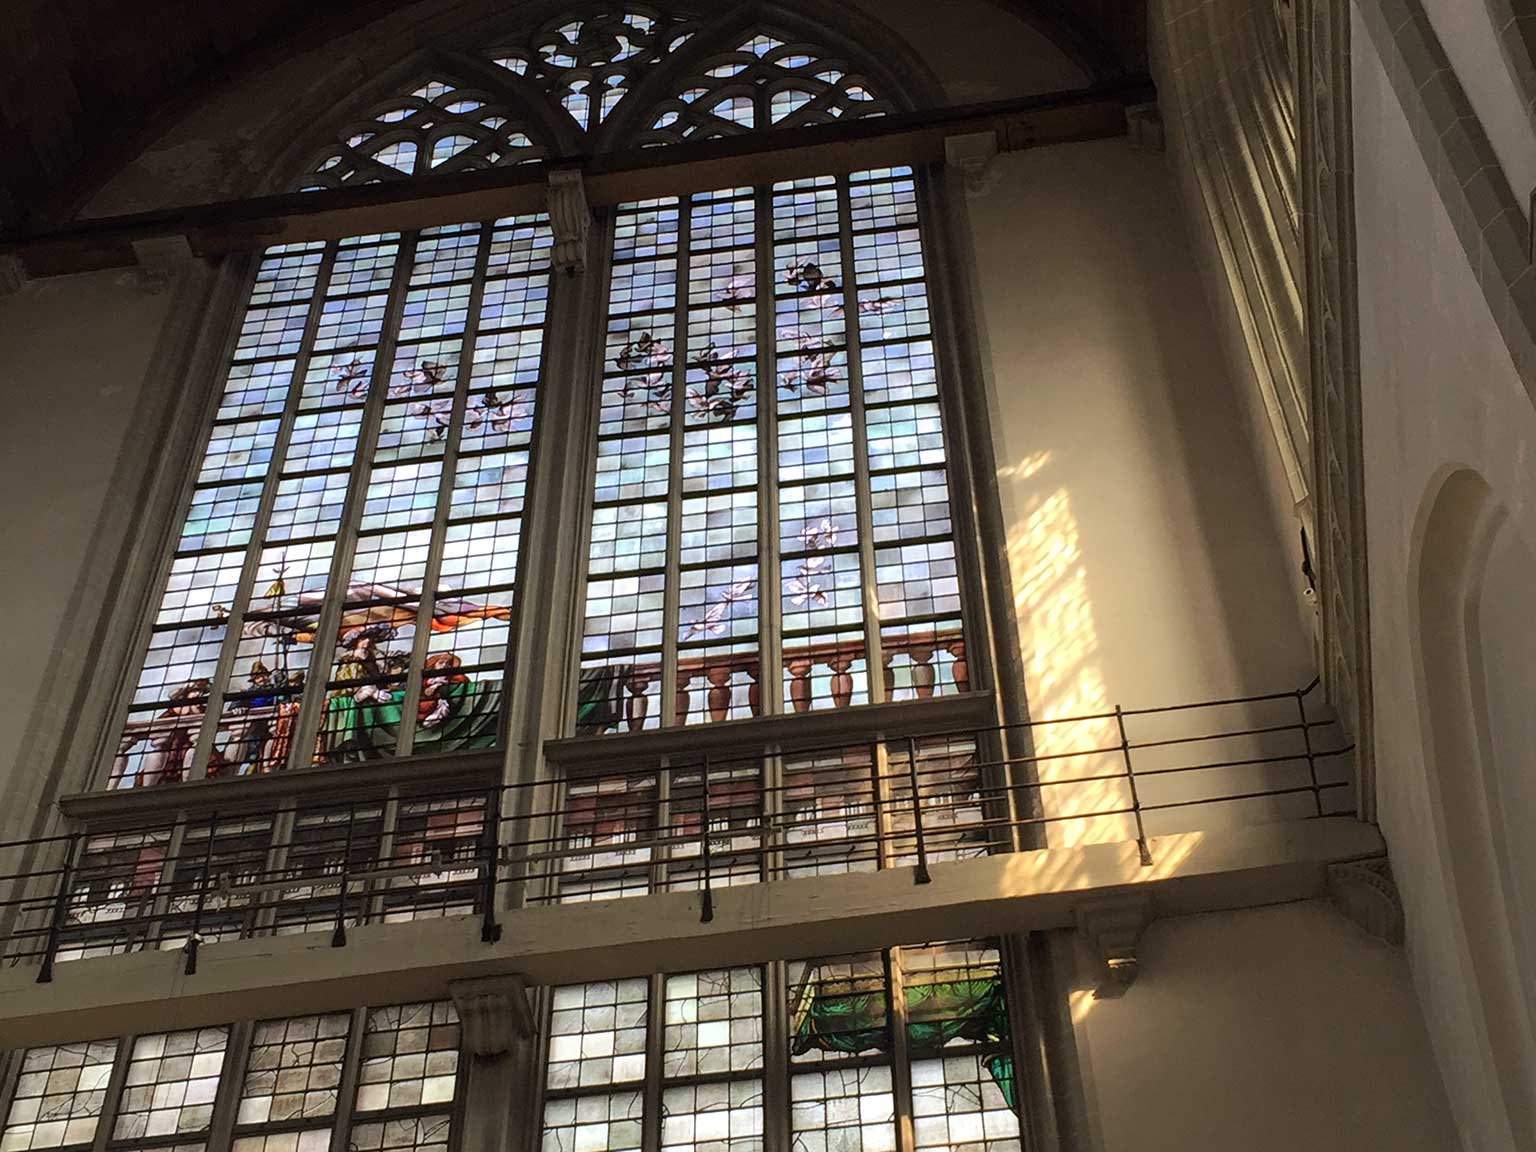 Stained glass window in the Nieuwe Kerk, Amsterdam